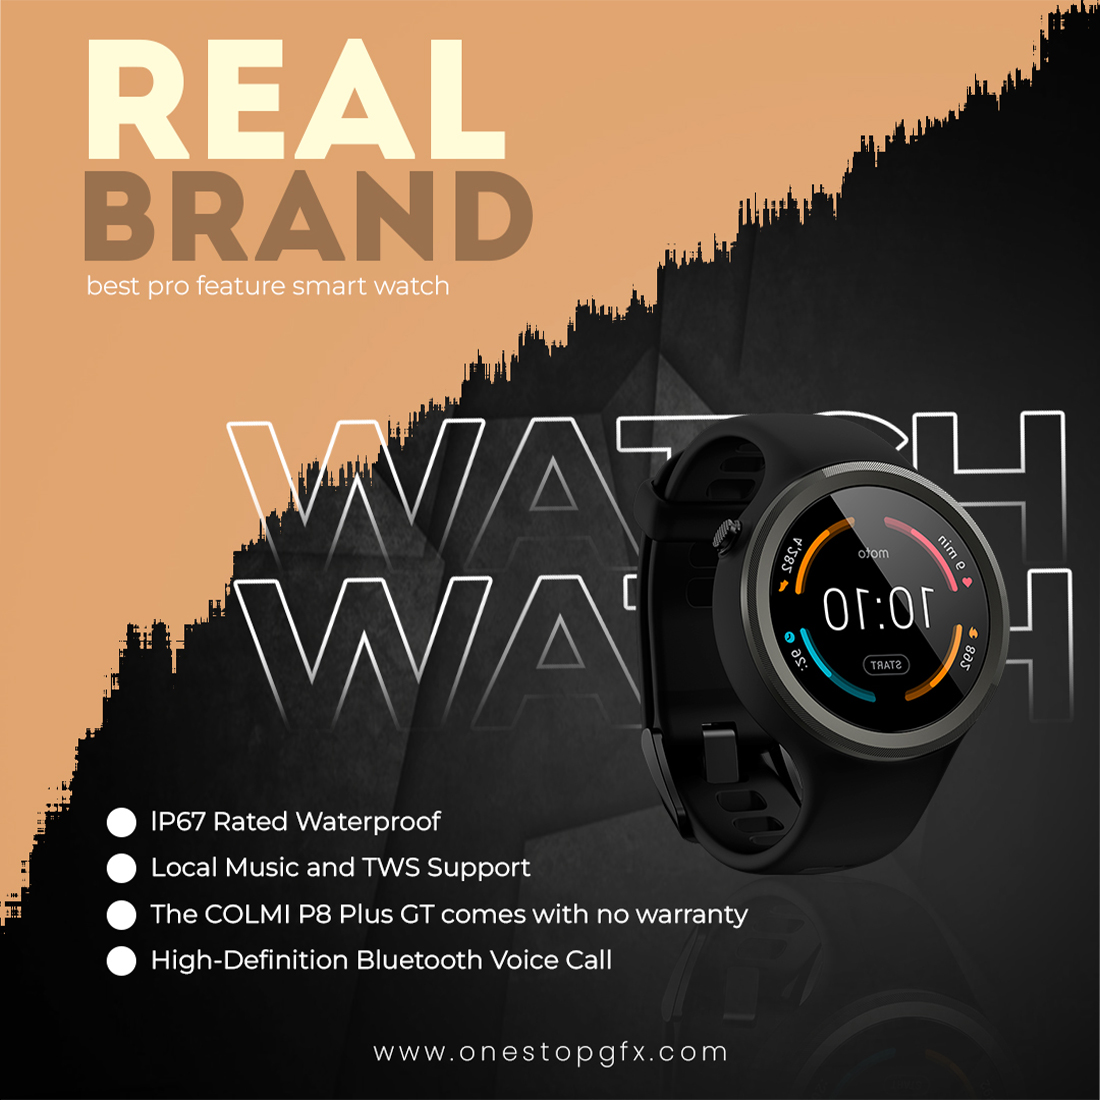 Smart Watch Social Media Post Design pinterest image.